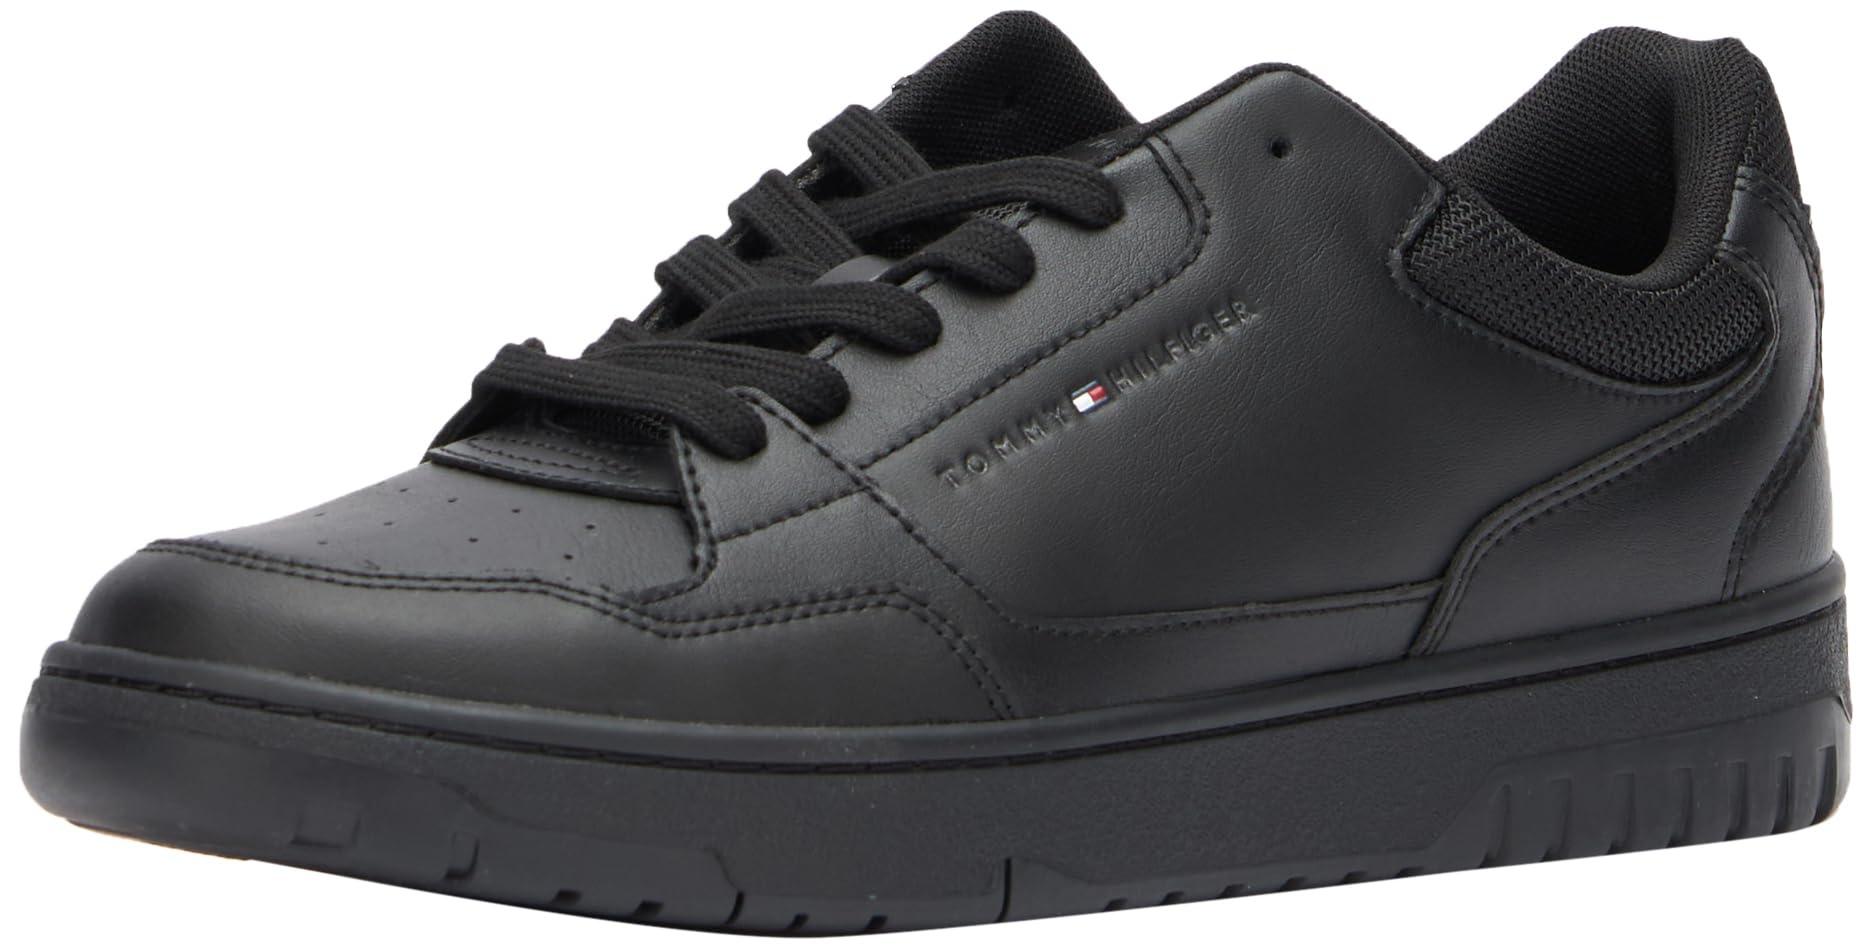 Tommy Hilfiger Herren Cupsole Sneaker Basket Core Leather Schuhe, Schwarz (Black), 40 EU